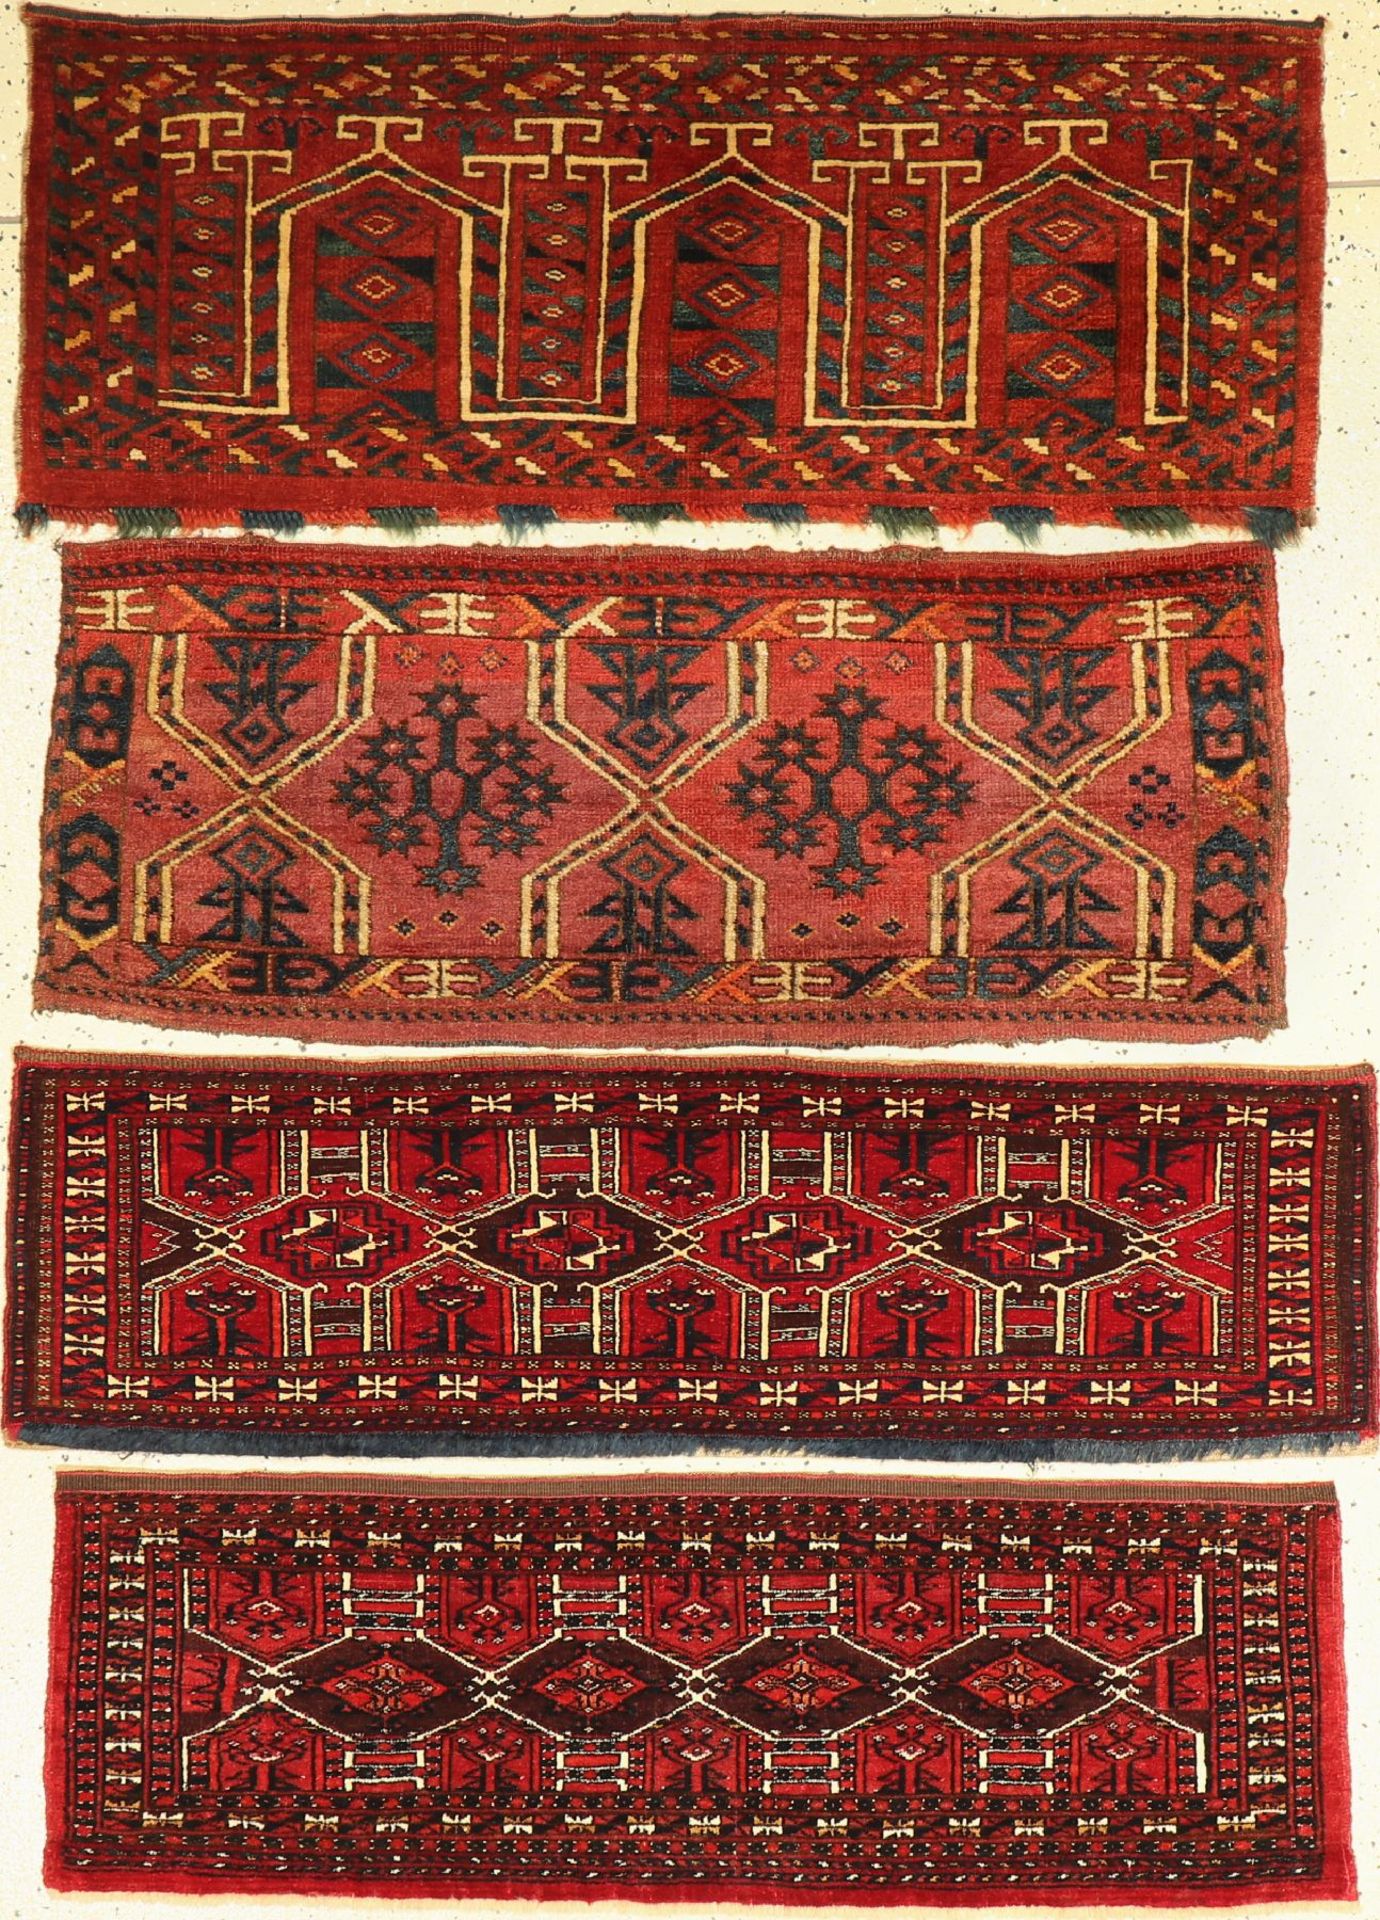 4 Antike Torba,   Turkmenistan, 19. Jhd, Wolle auf Wolle,